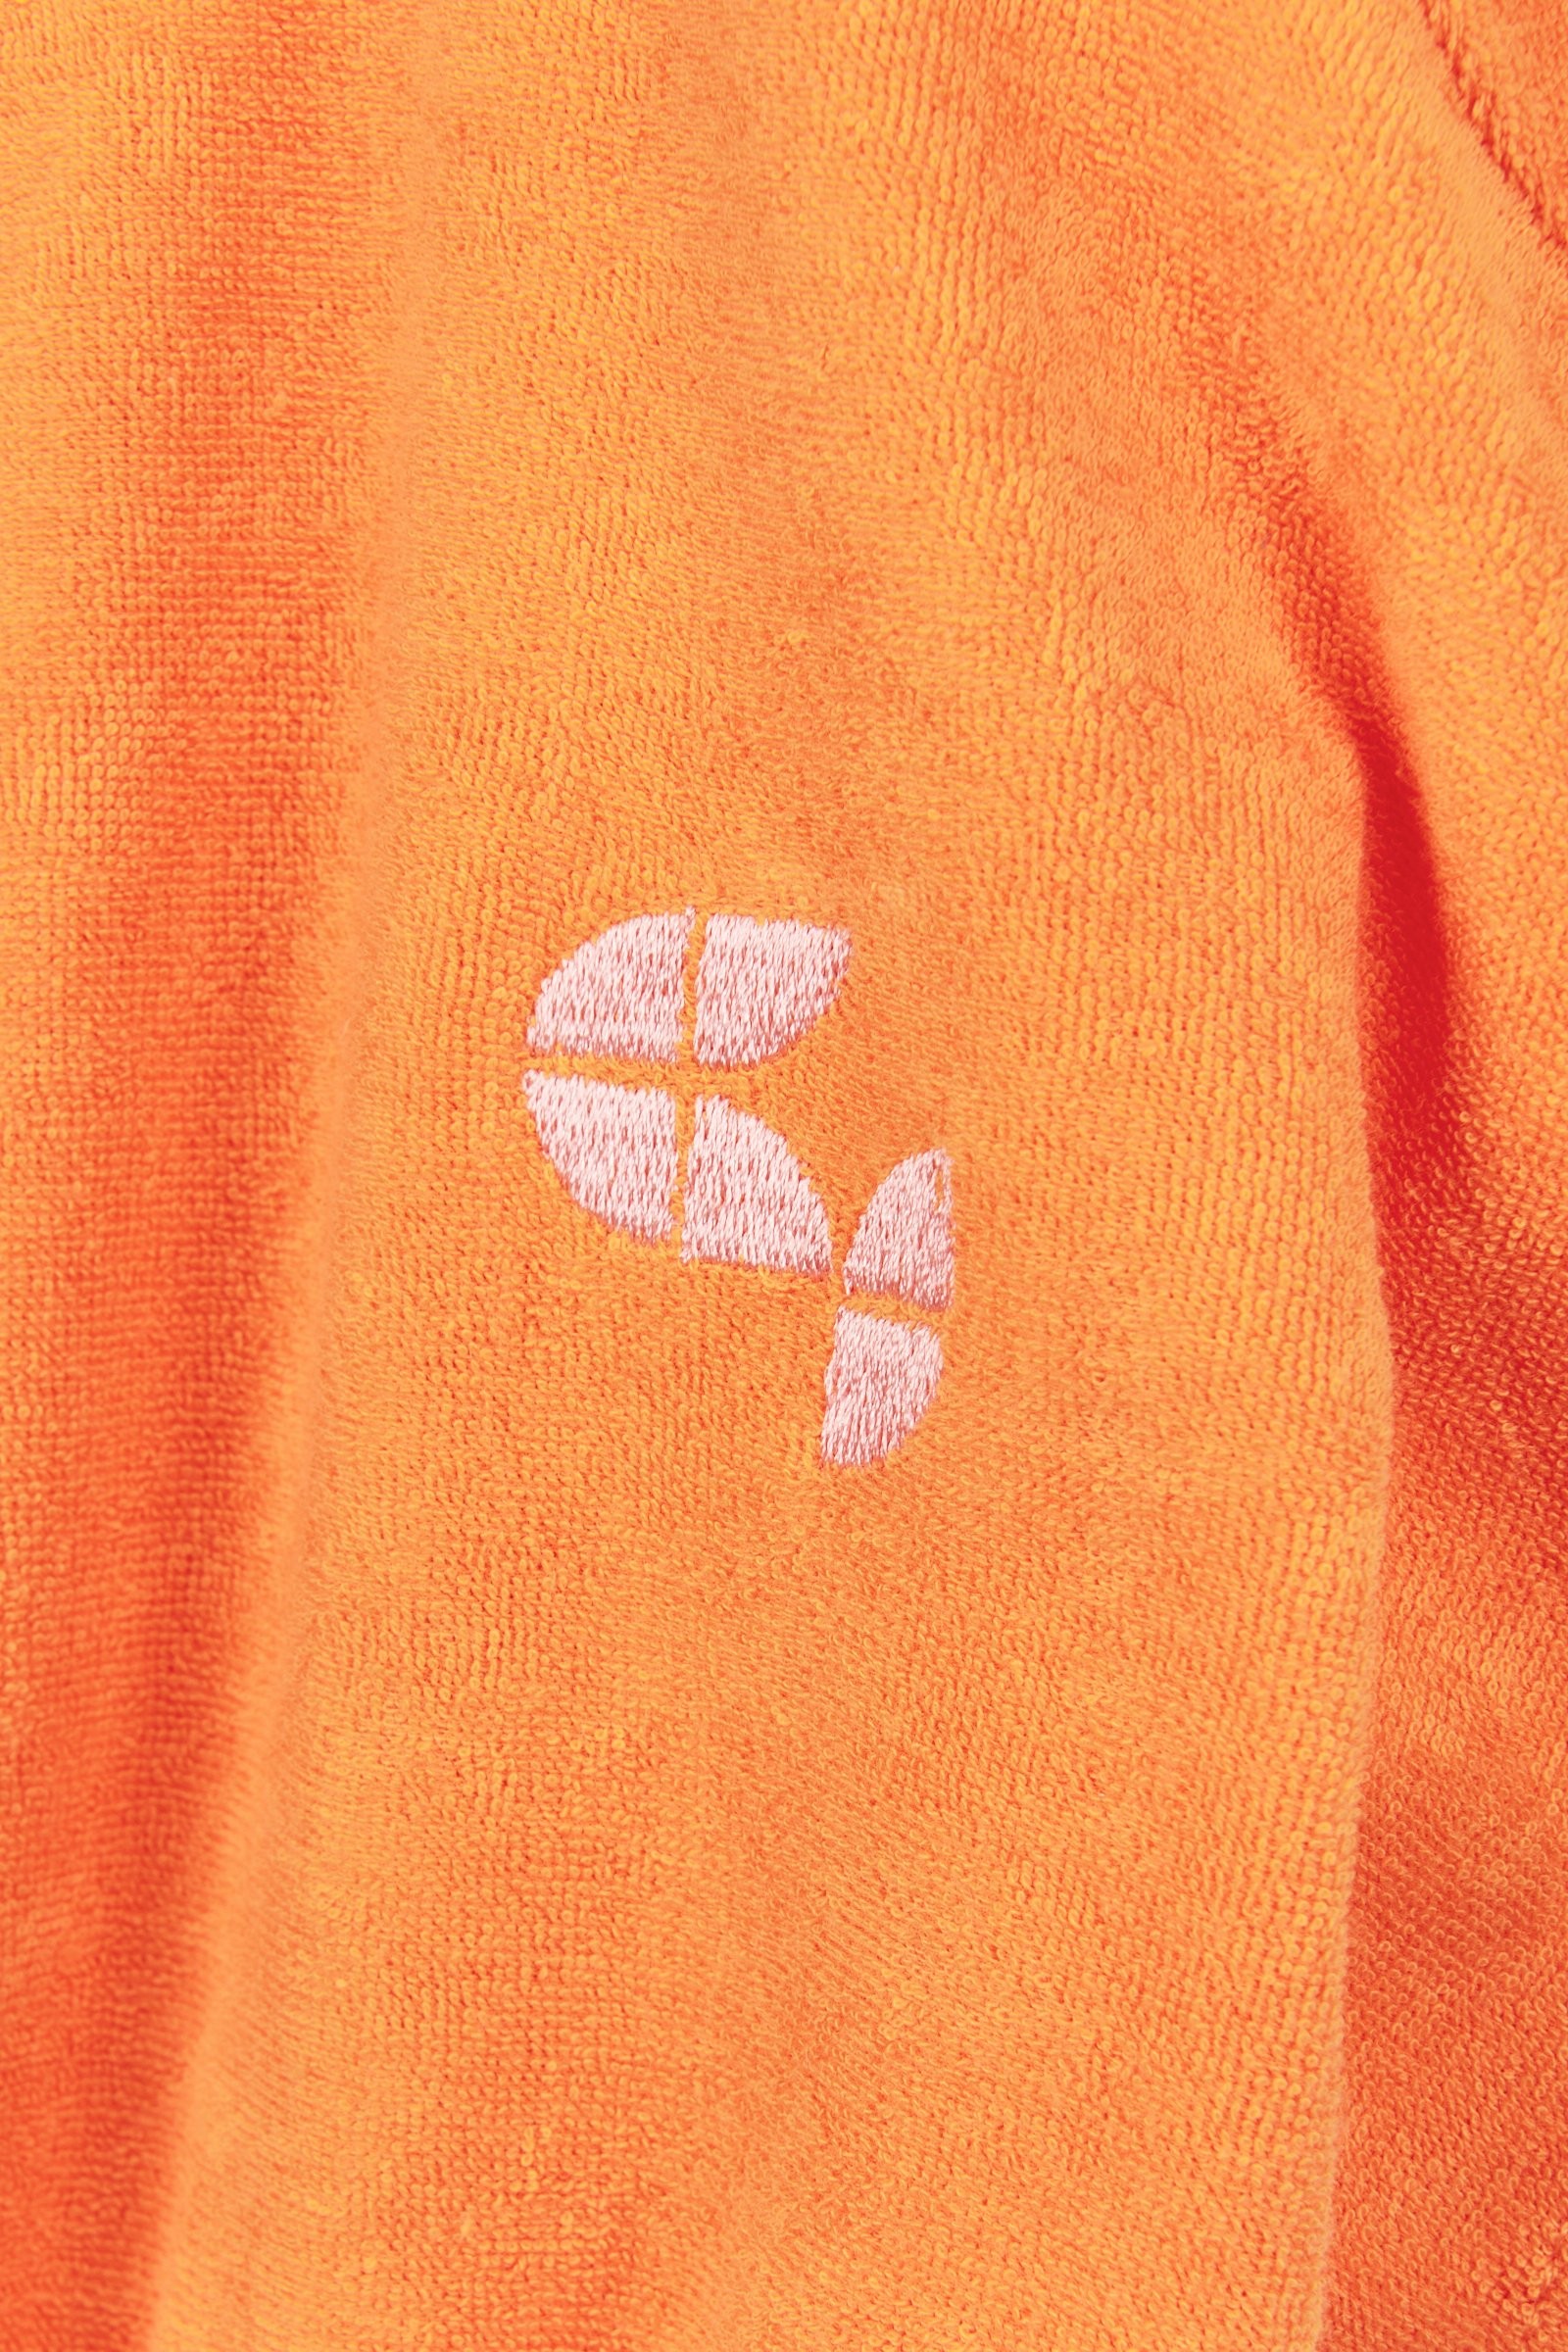 CKS Kids - EMON - korte jurk - intens oranje